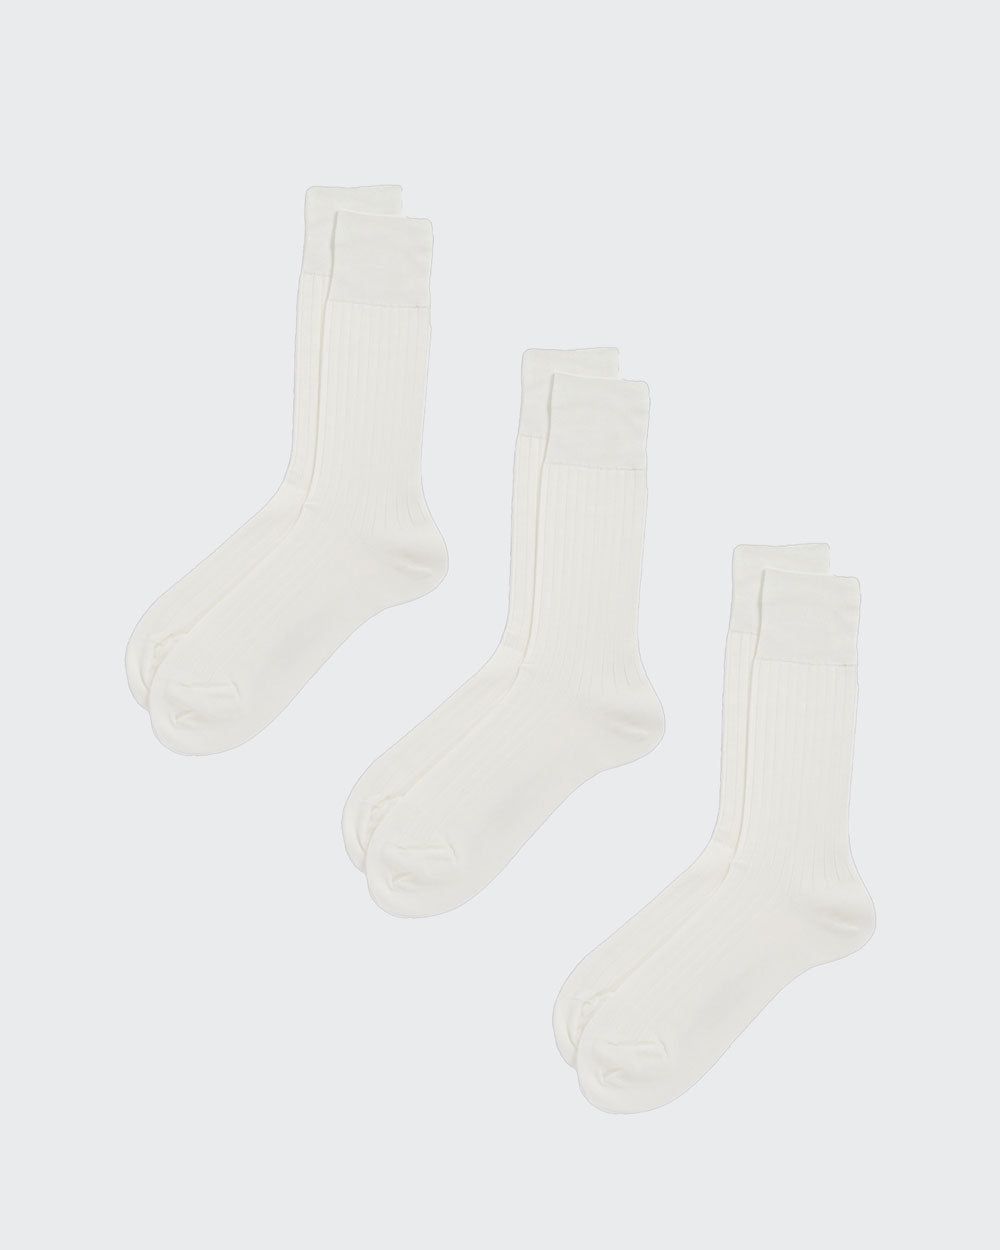 Dress Socks Set / White 3pc